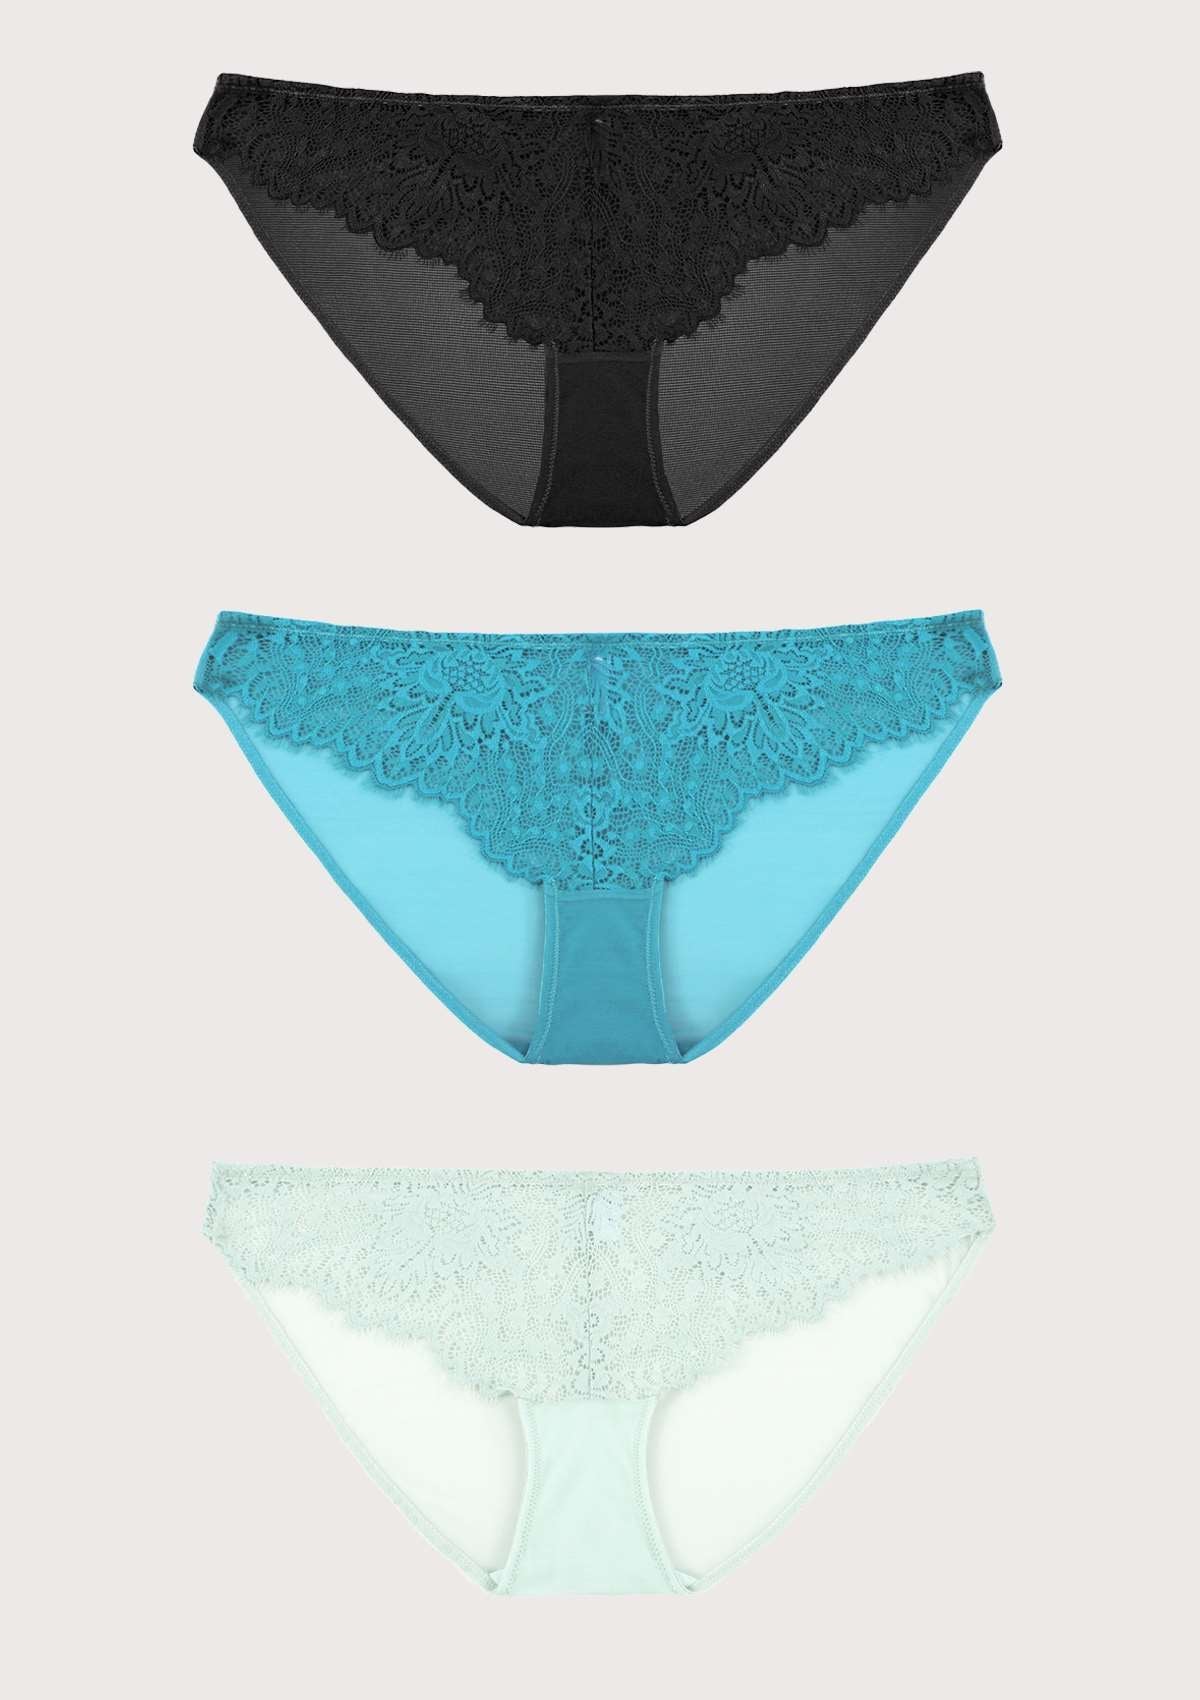 HSIA Sunflower Exquisite Lighweight Soft Lace Bikini Panties 3 Pack - M / Black+Horizon Blue+Pink